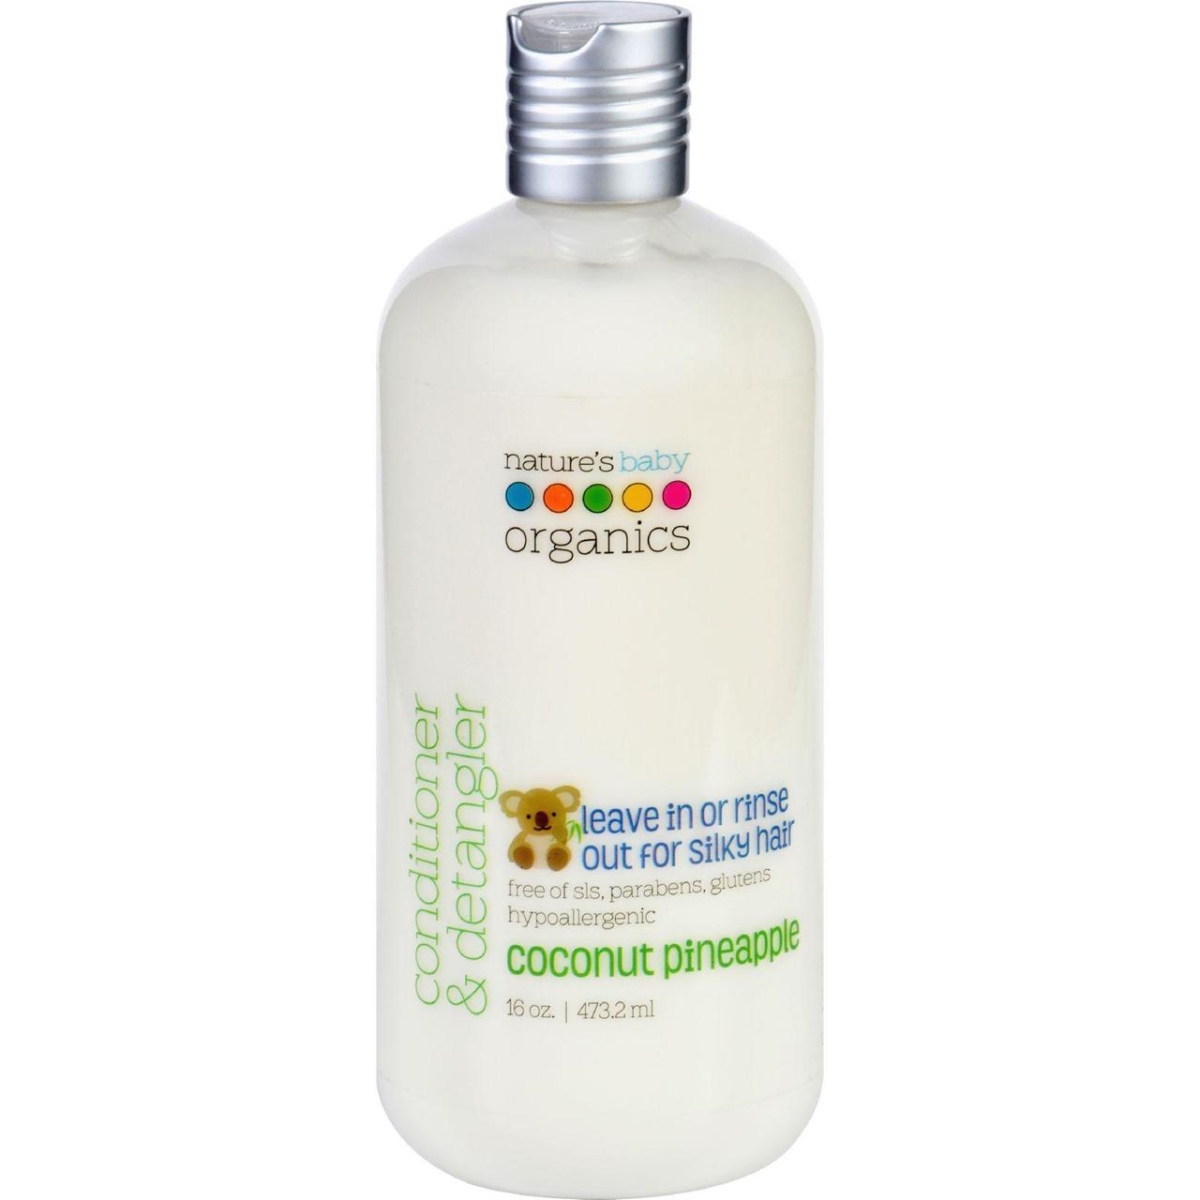 Hg1624378 16 Oz Organics Conditioner & Detangler - Coconut Pineapple